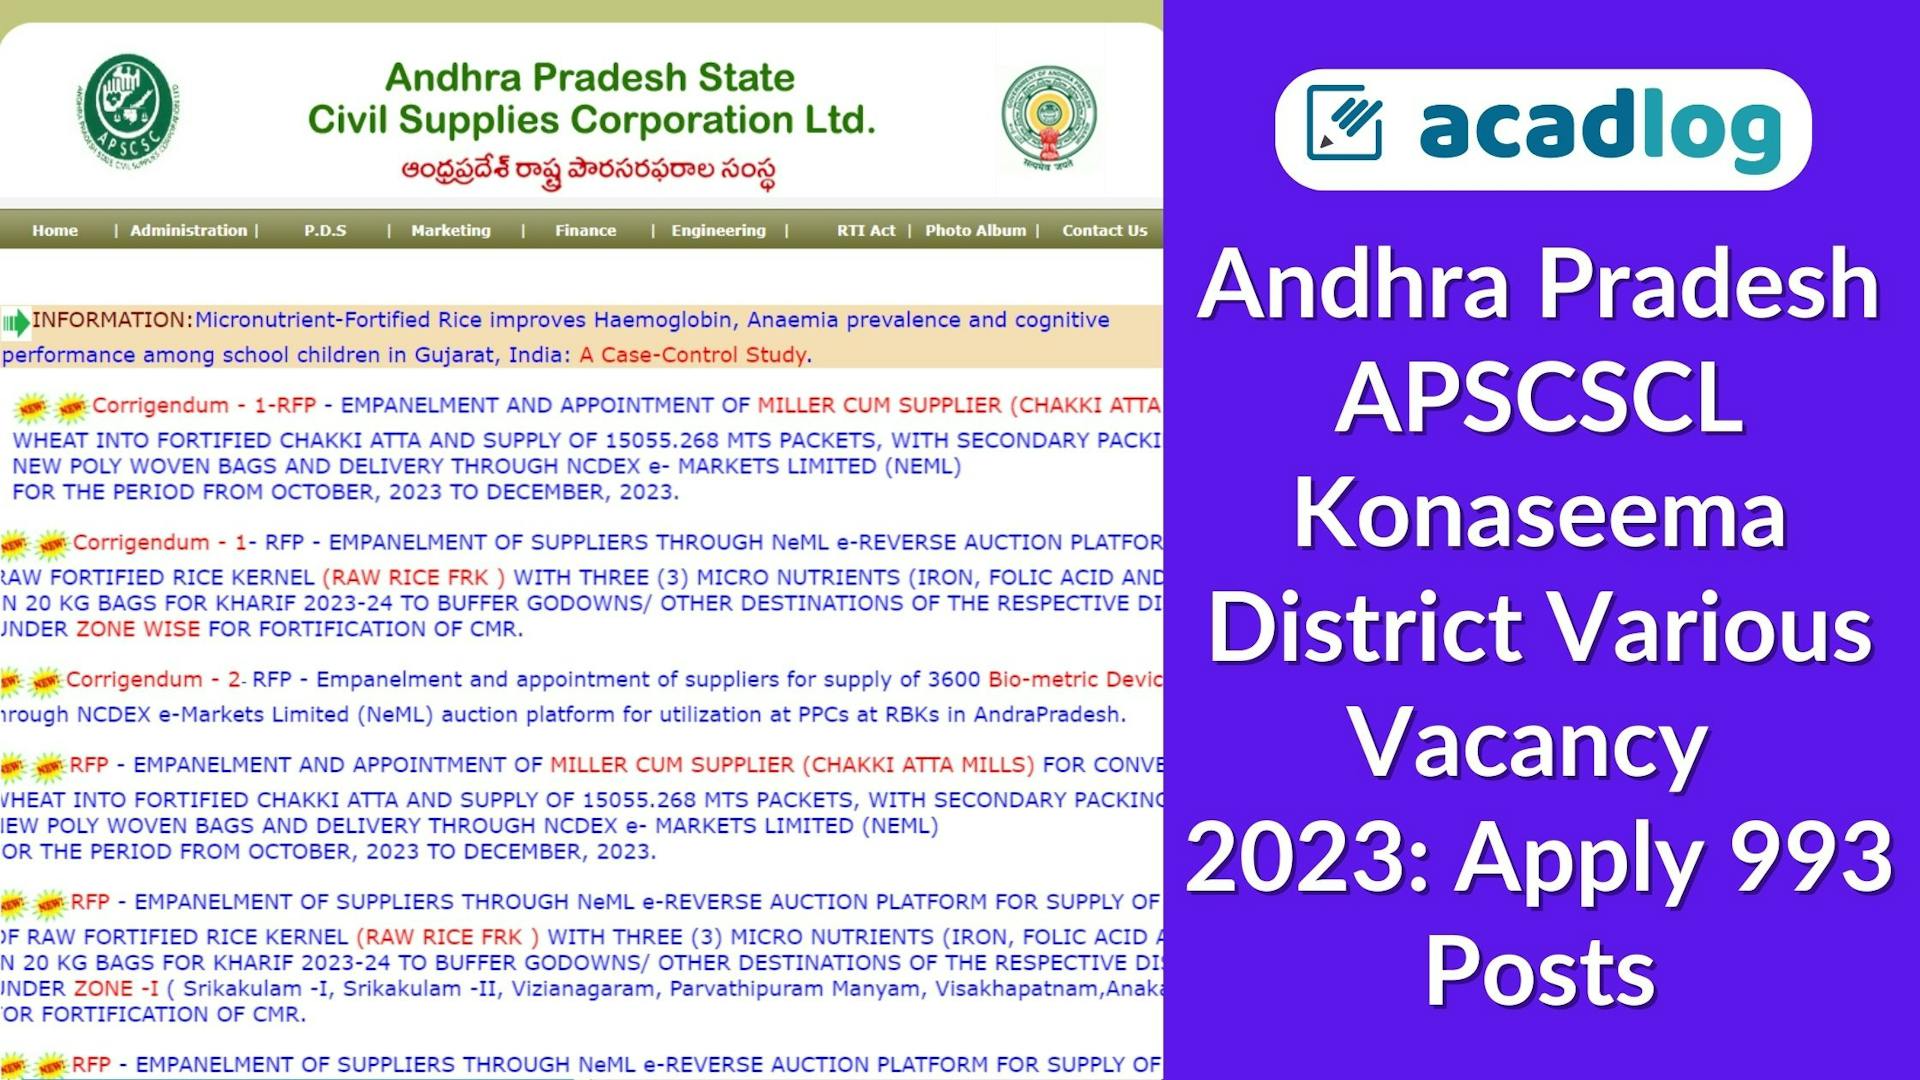 Andhra Pradesh APSCSCL Konaseema District Various Vacancy 2023: Apply 993 Posts